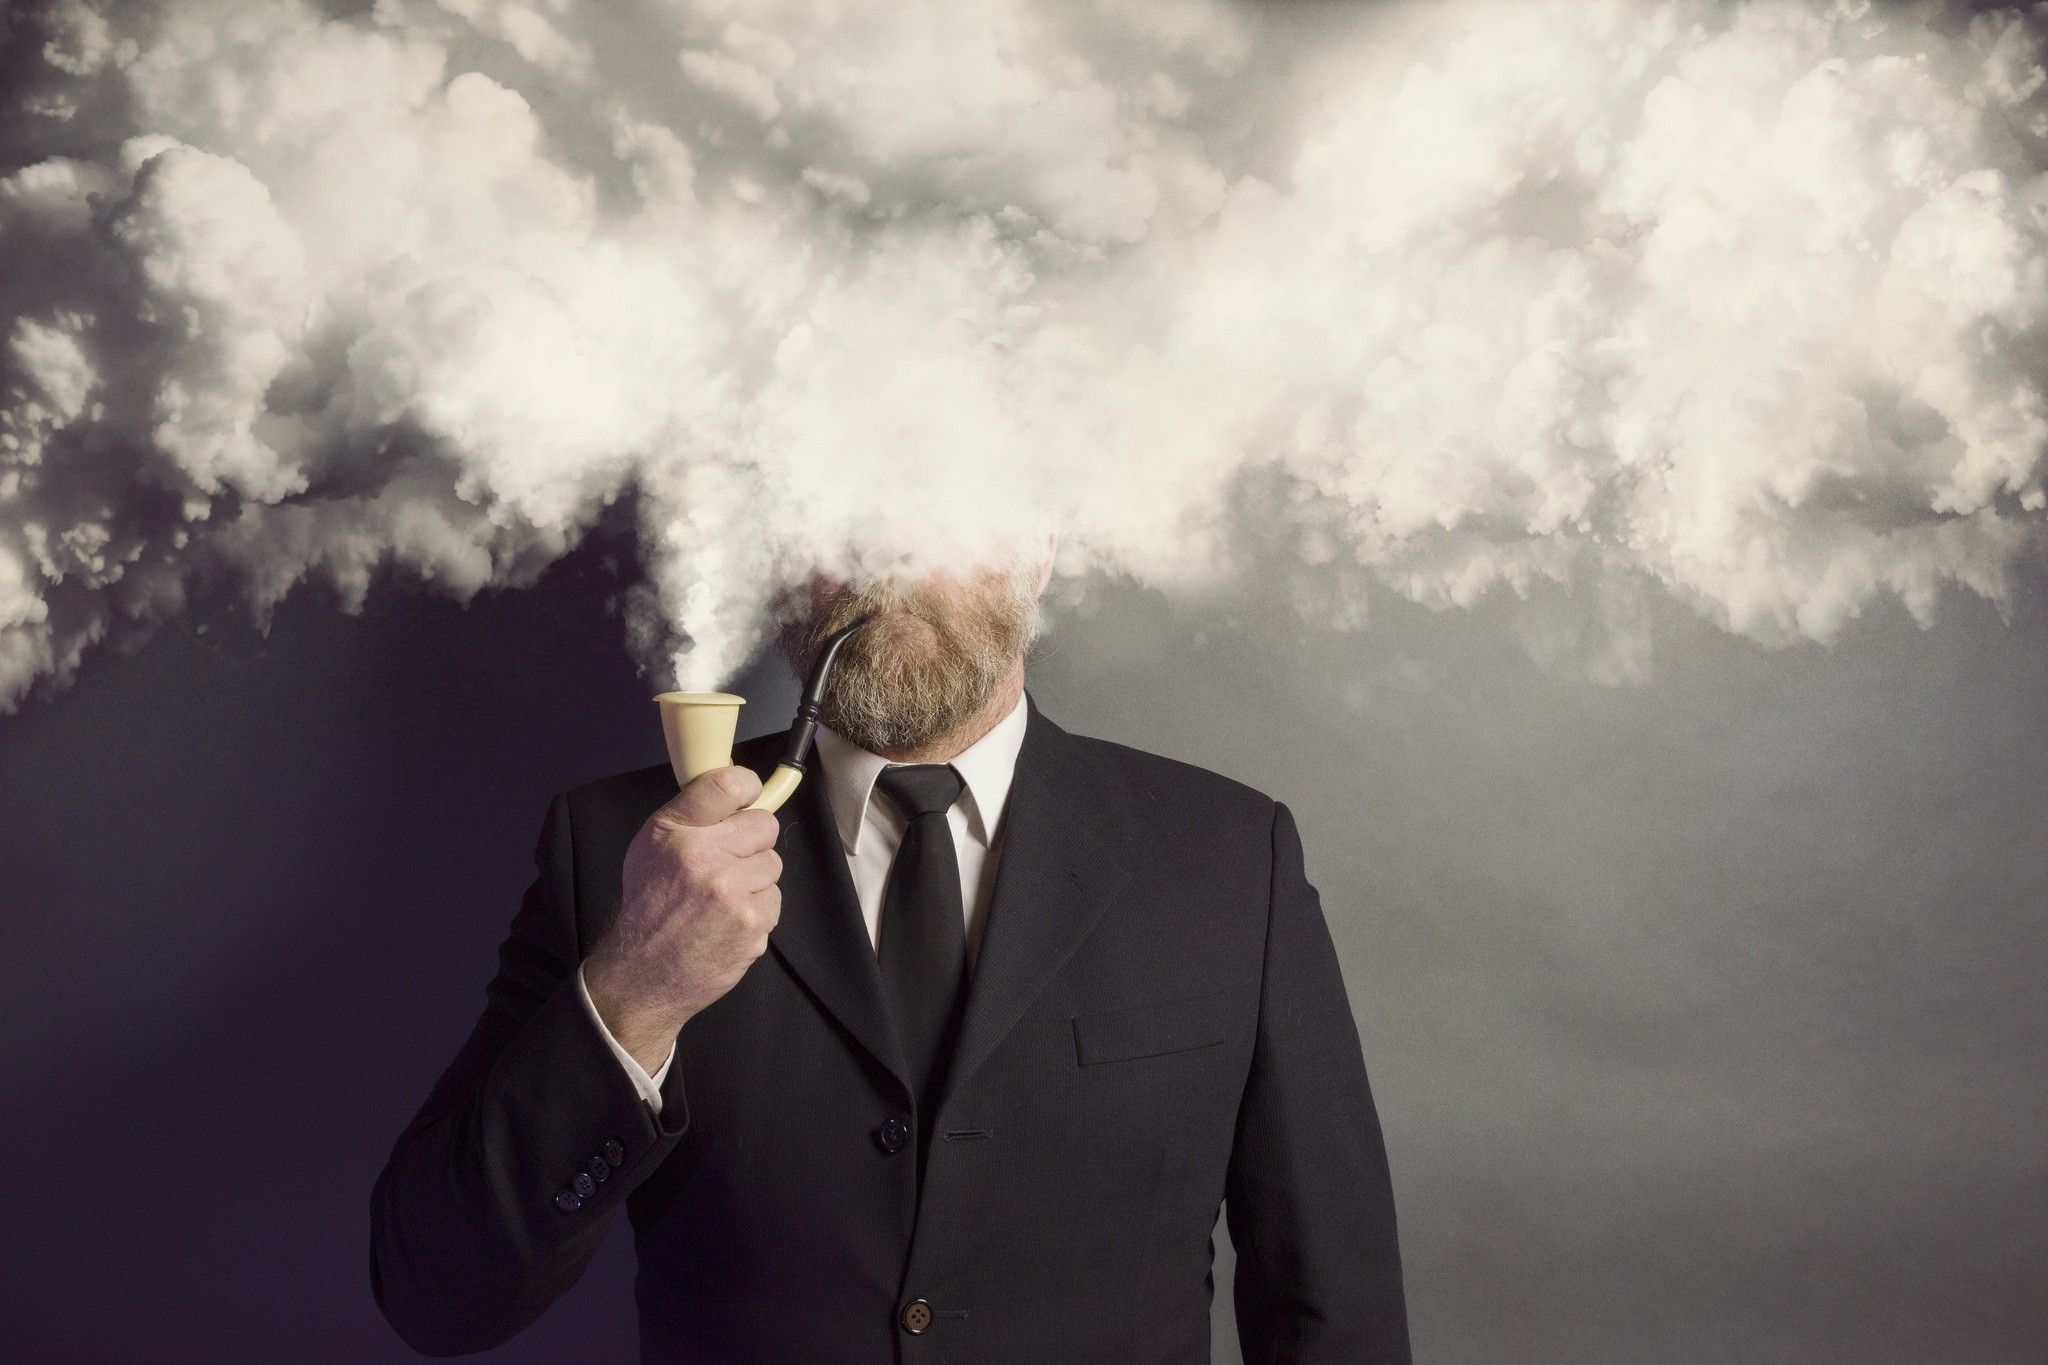 Smoking Beard Man, HD Lifestyle, 4k Wallpaper, Image, Background, Photo and Picture